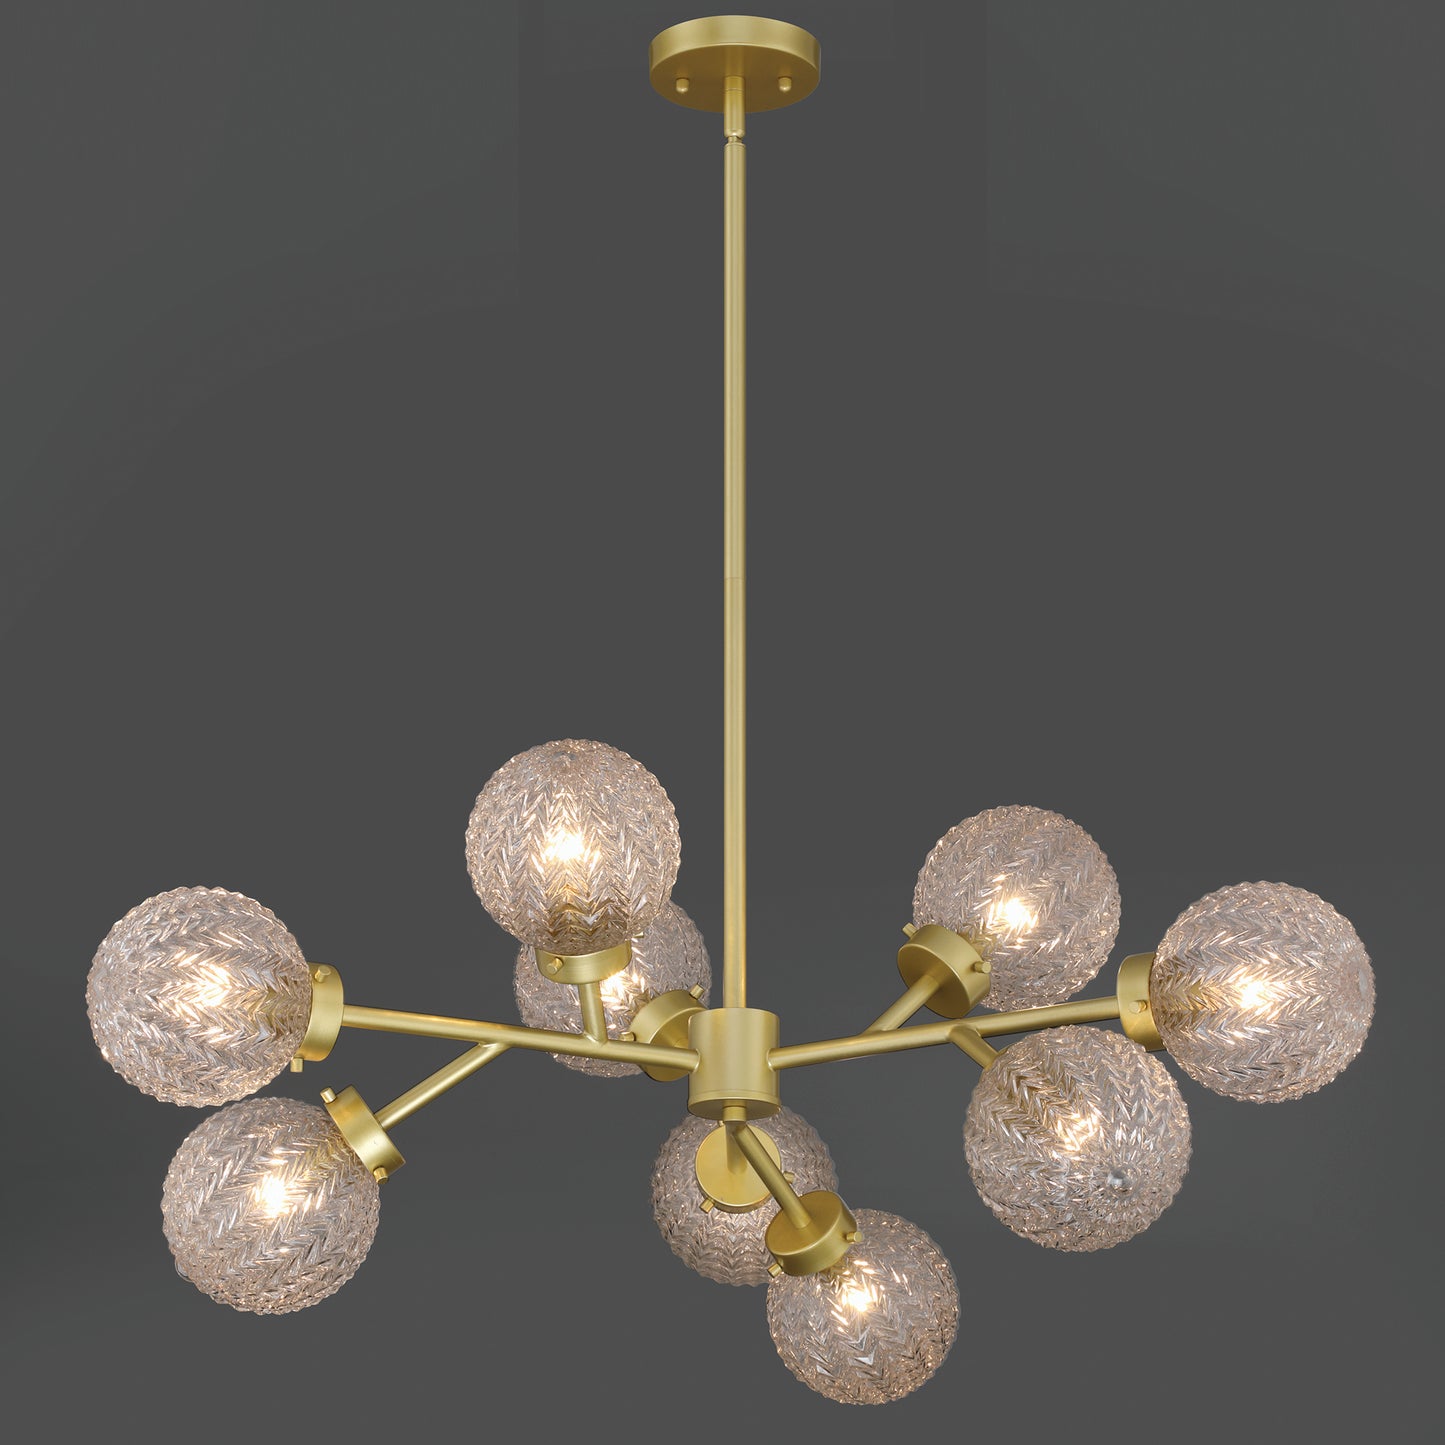 9 light sputnik classic chandelier (9) by ACROMA